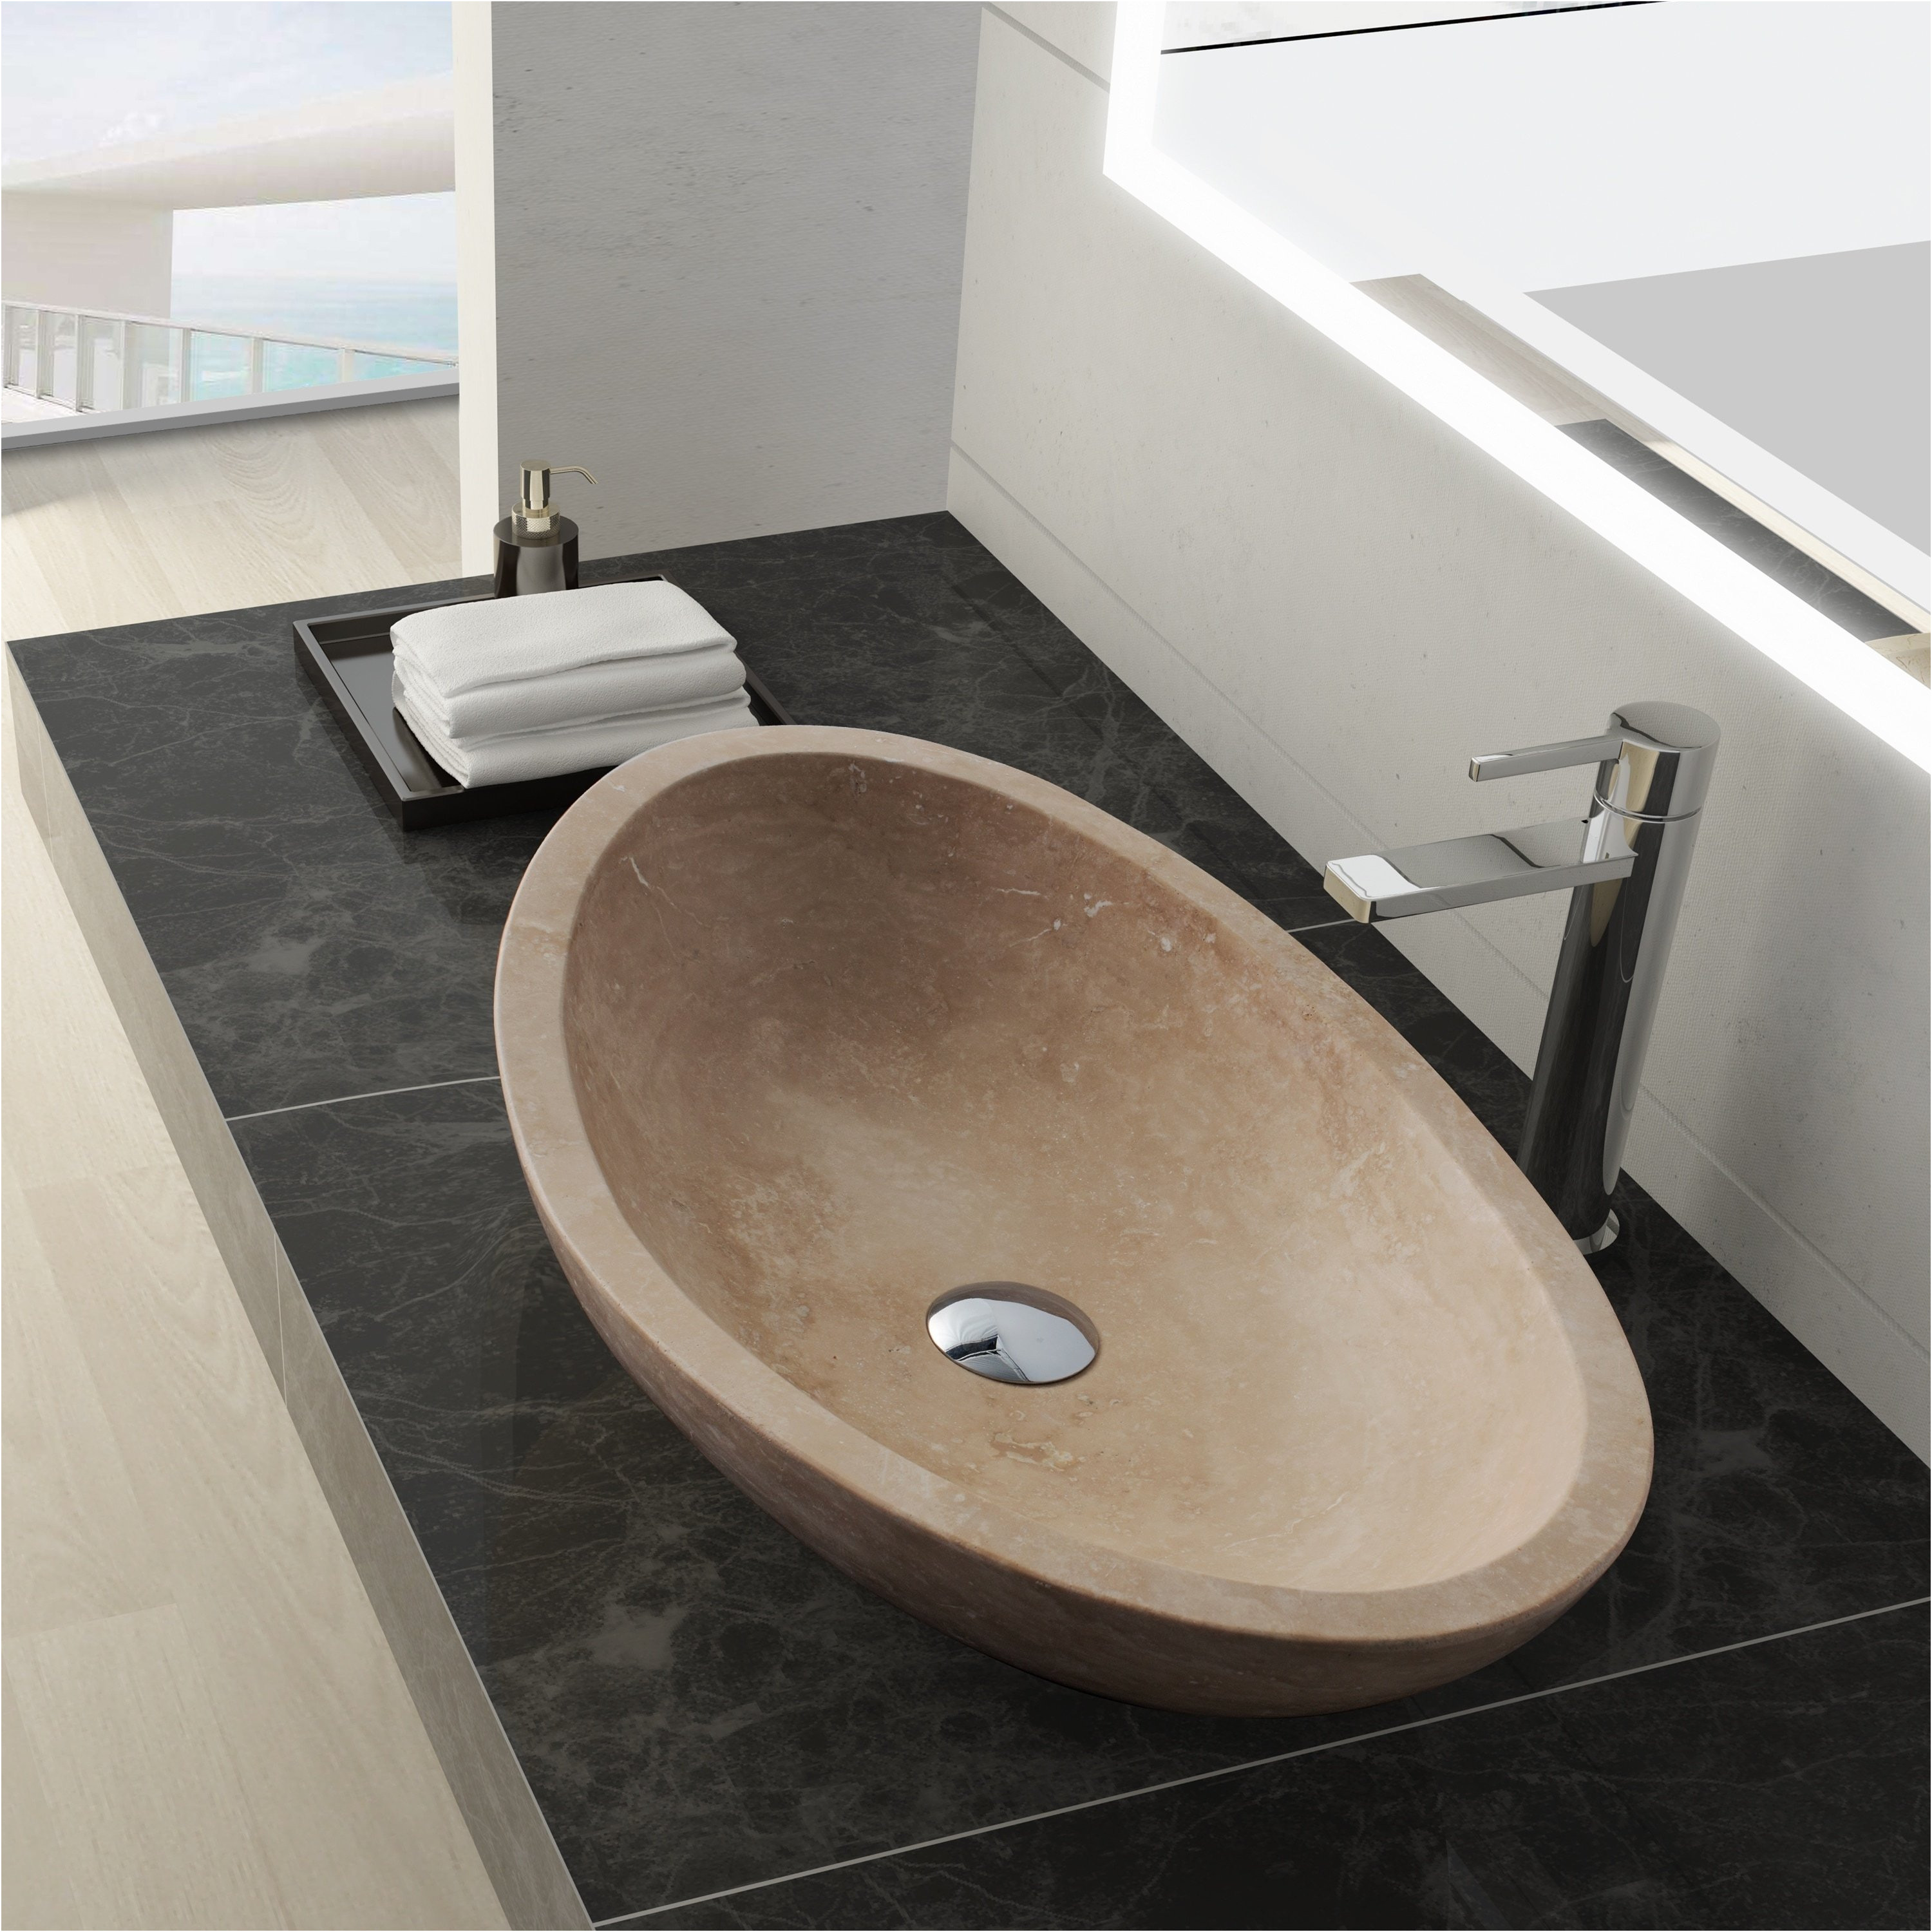 Elegant Stone Bathroom Sinks Clearance